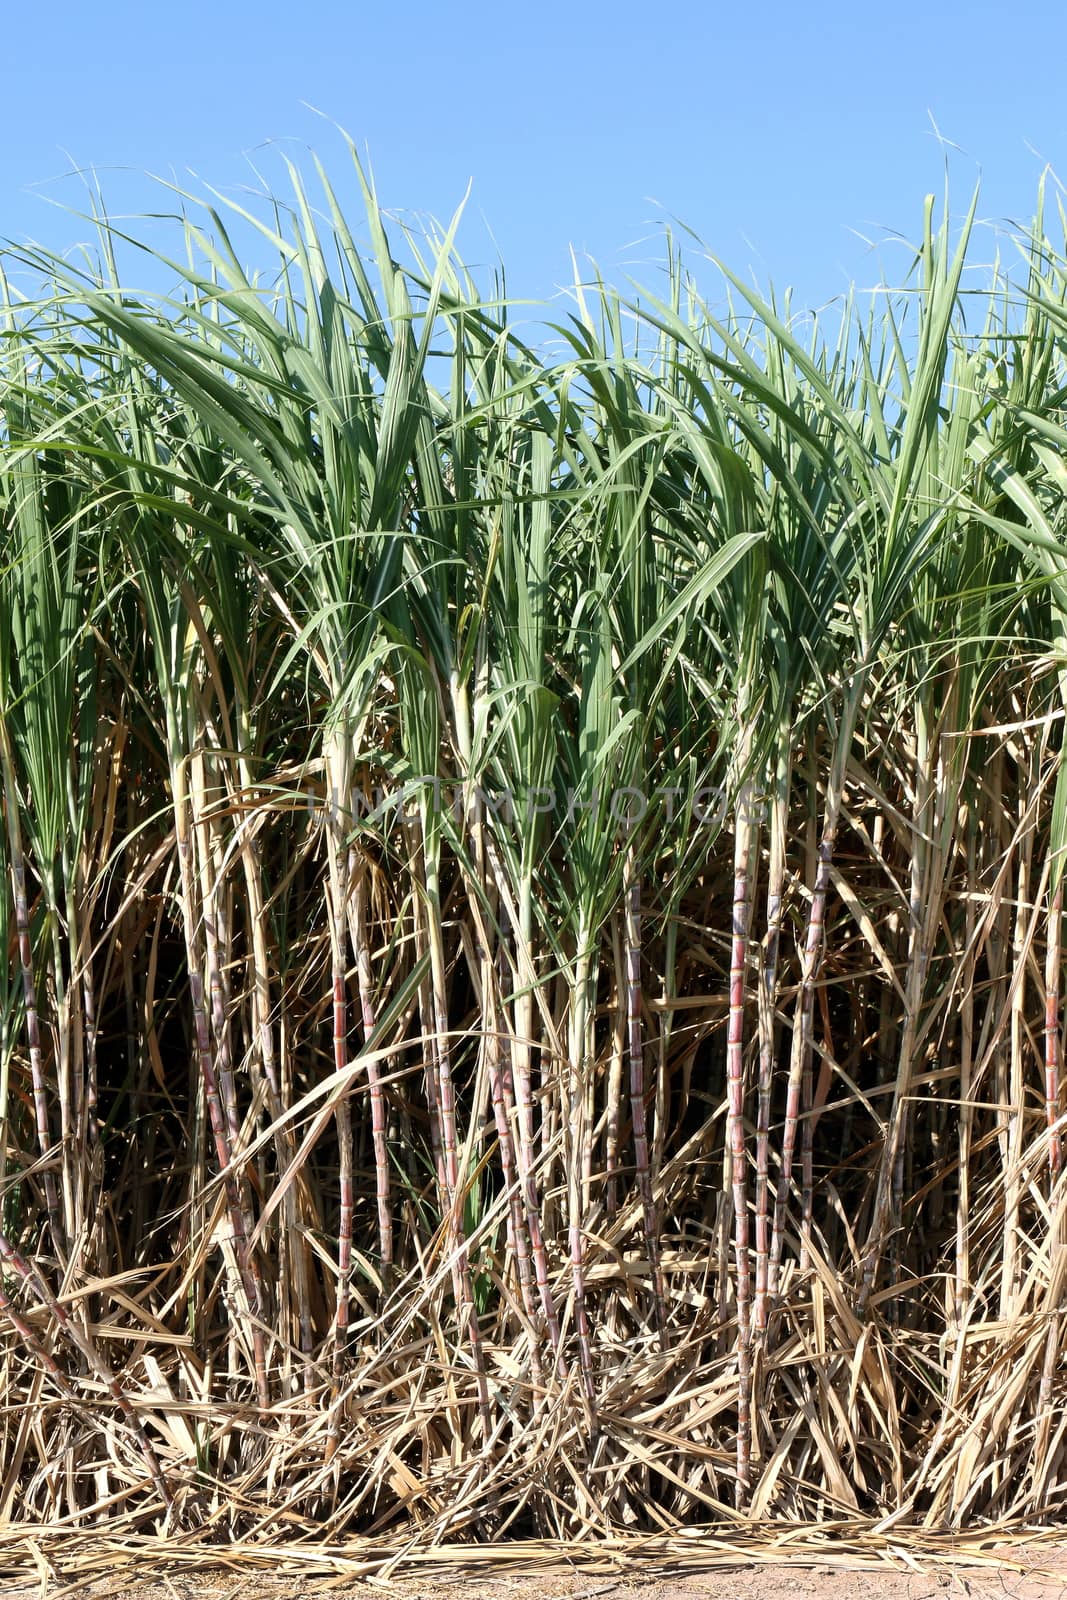 Sugarcane plants grow in field, Plantation Sugar cane tree farm, Background of sugarcane field by cgdeaw